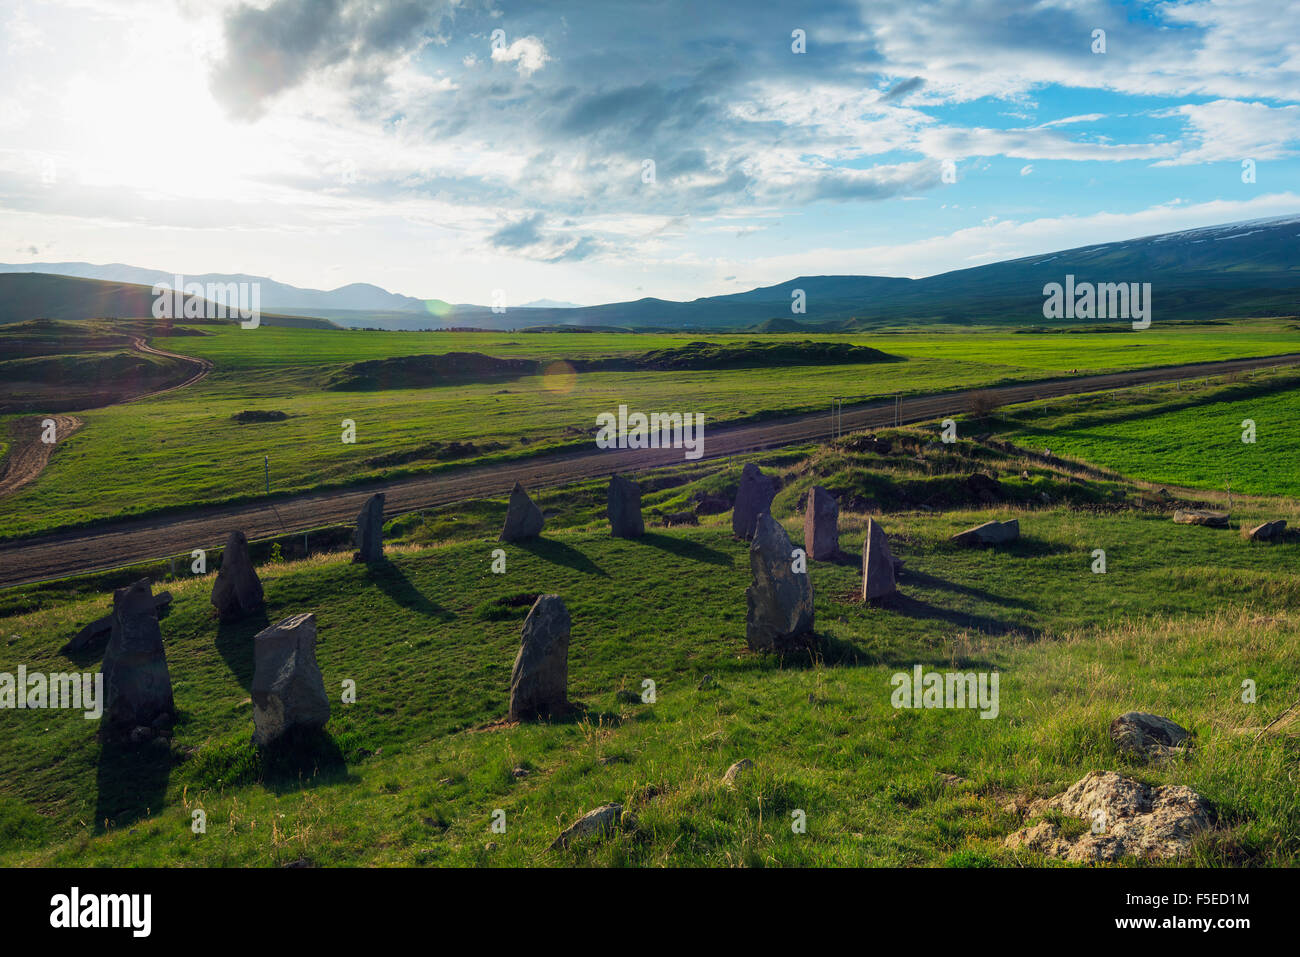 Karahunj Zorats Karer, prehistoric archaeological stonehenge site, Syunik Province, Armenia, Caucasus, Central Asia, Asia Stock Photo